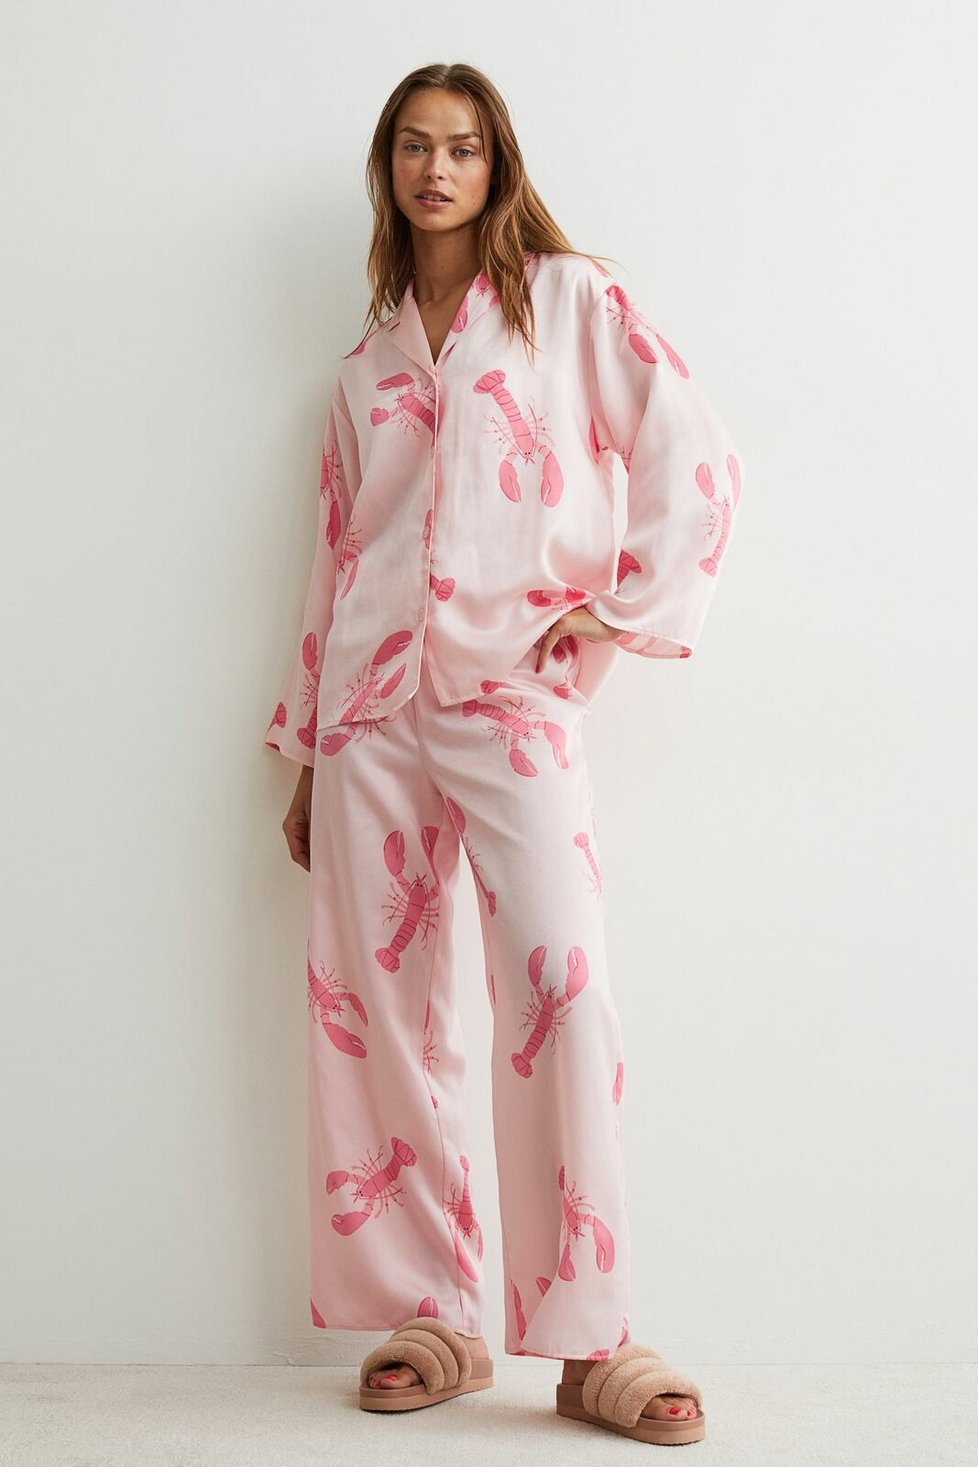 H&M, pyžamový komplet 949 Kč